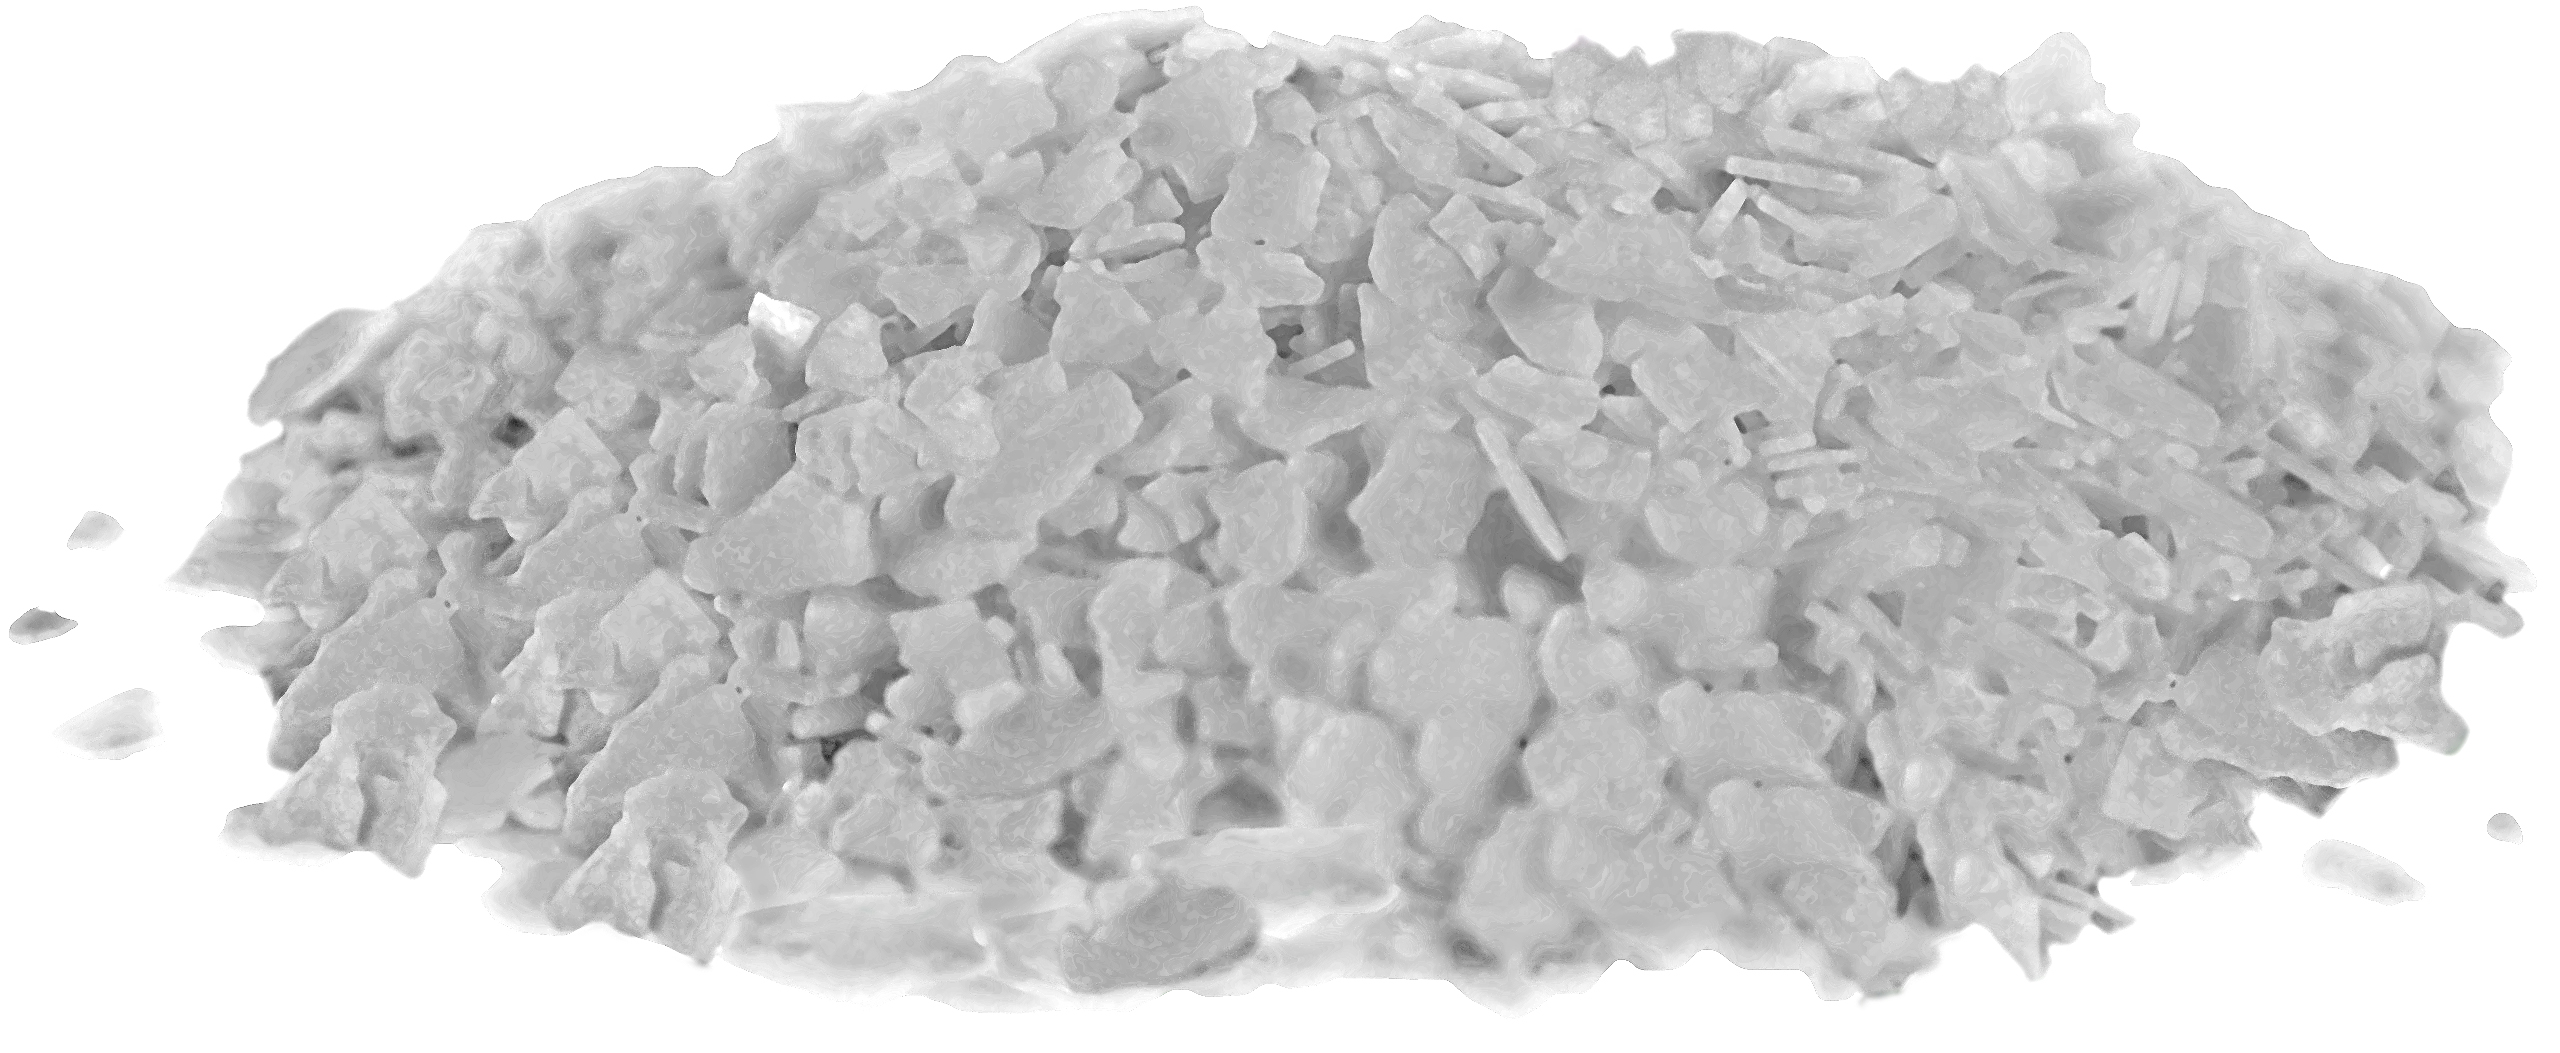 Potassium Hydroxide Flakes KOH, Caustic Potash Anhydrous KOH Dry - 8 lbs -  4 x 2lb Bottles